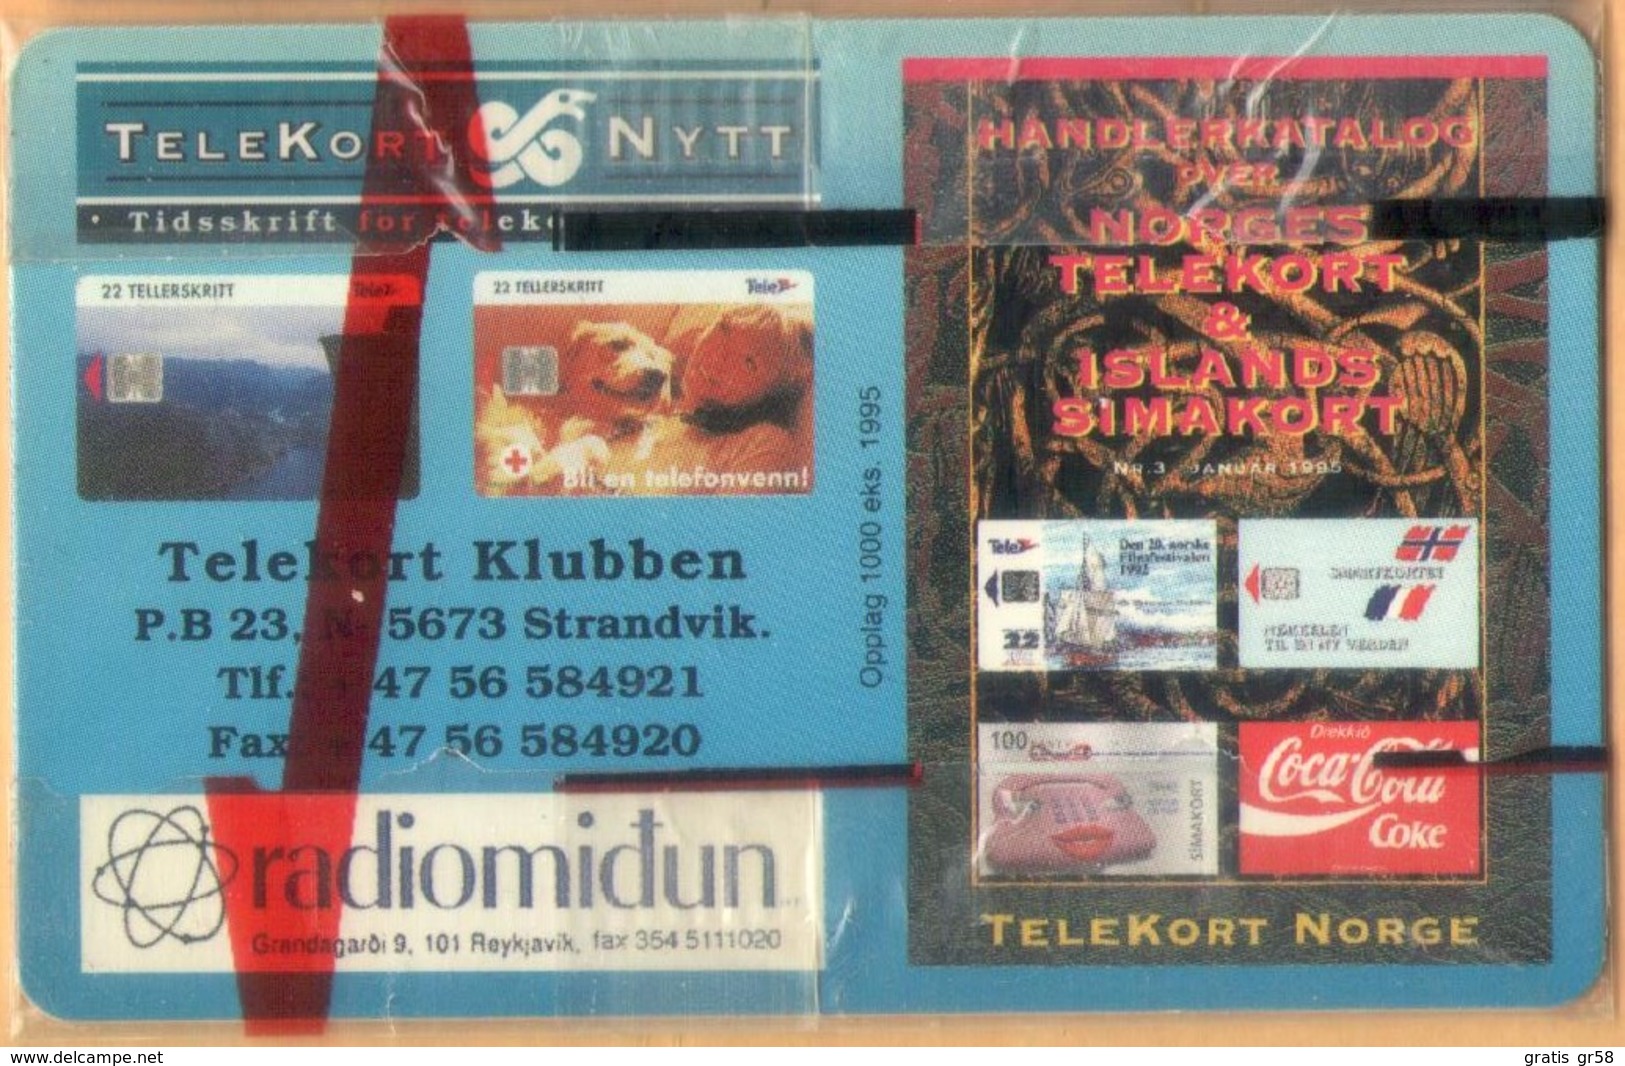 Iceland - ICE-P-1, Radomidun, TeleKort Norge - Astronaut, Coca Cola, 100U, 1,000ex, 1995, Mint NSB - Island